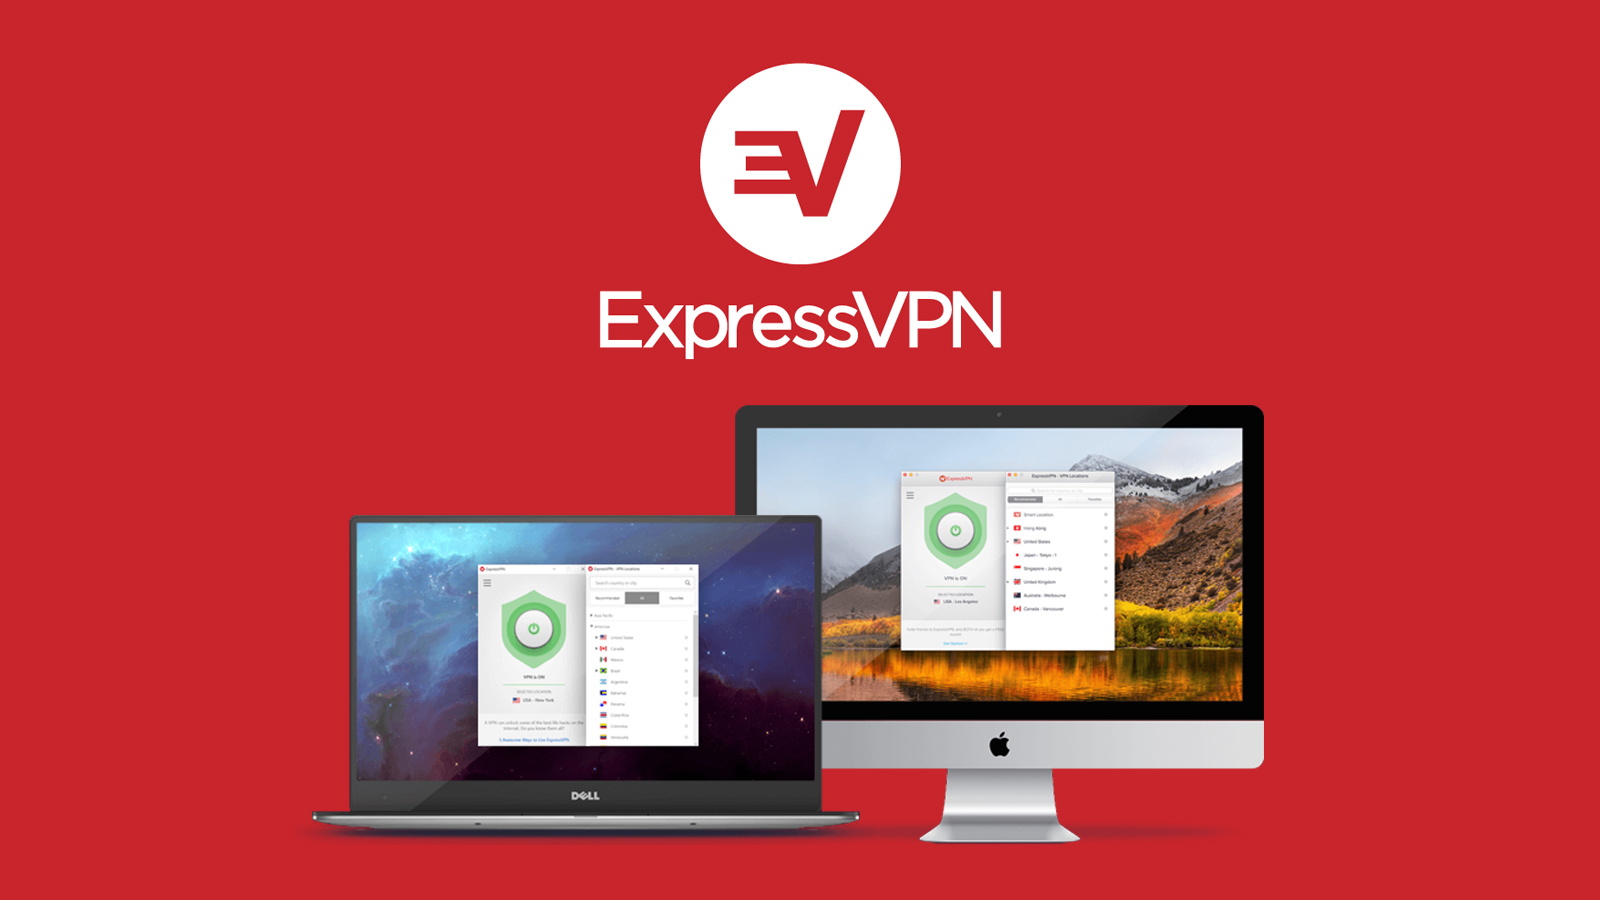 express vpn activation code crack 2018